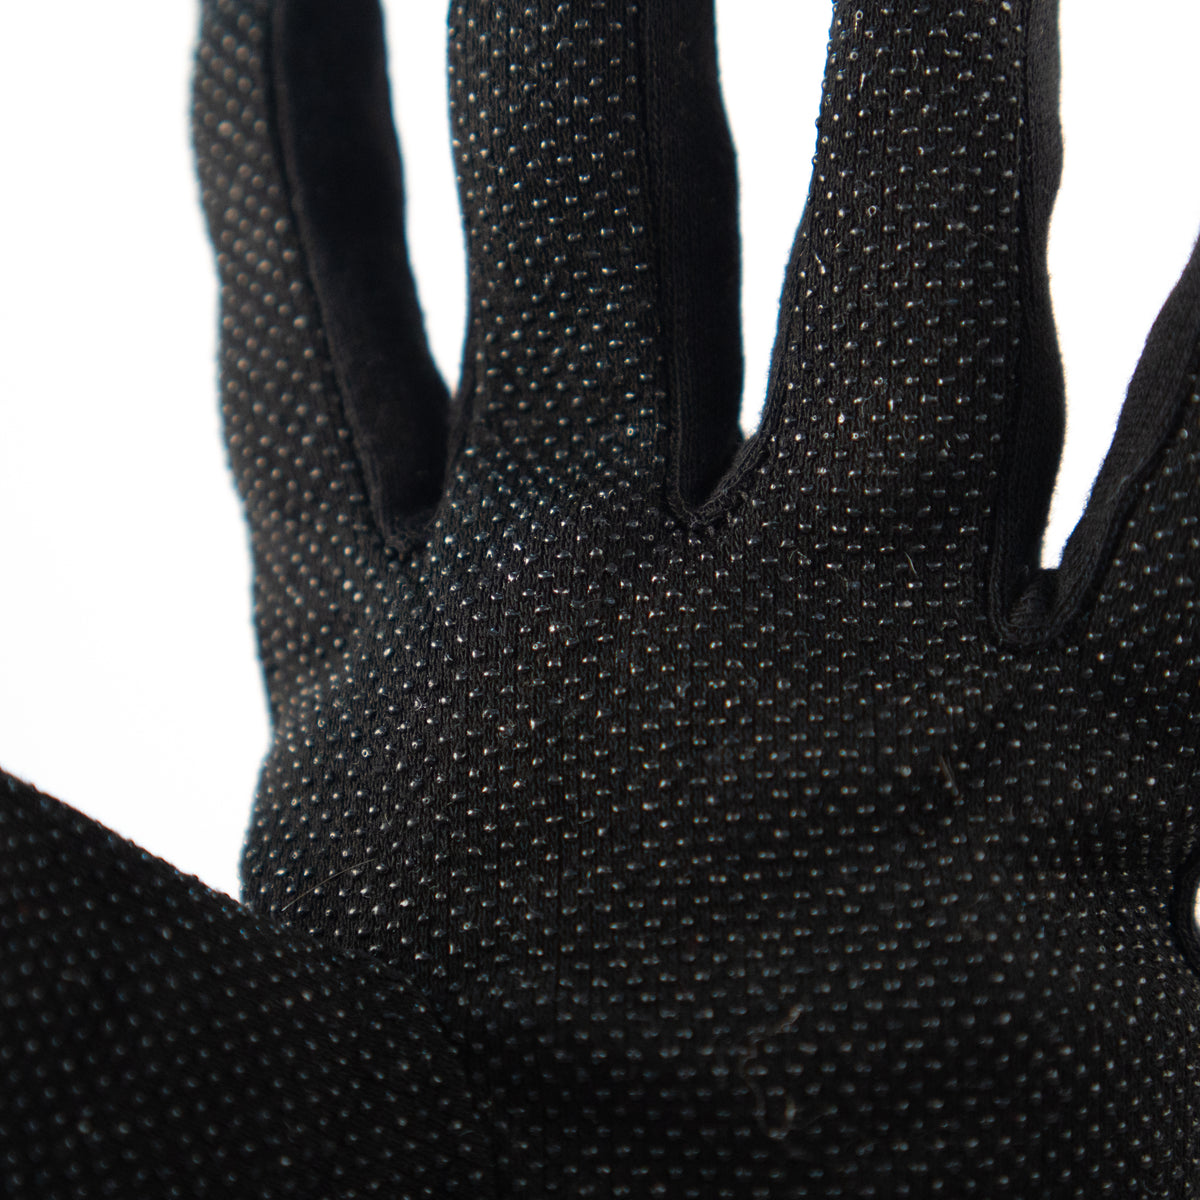 Set of 5 pairs of black gloves